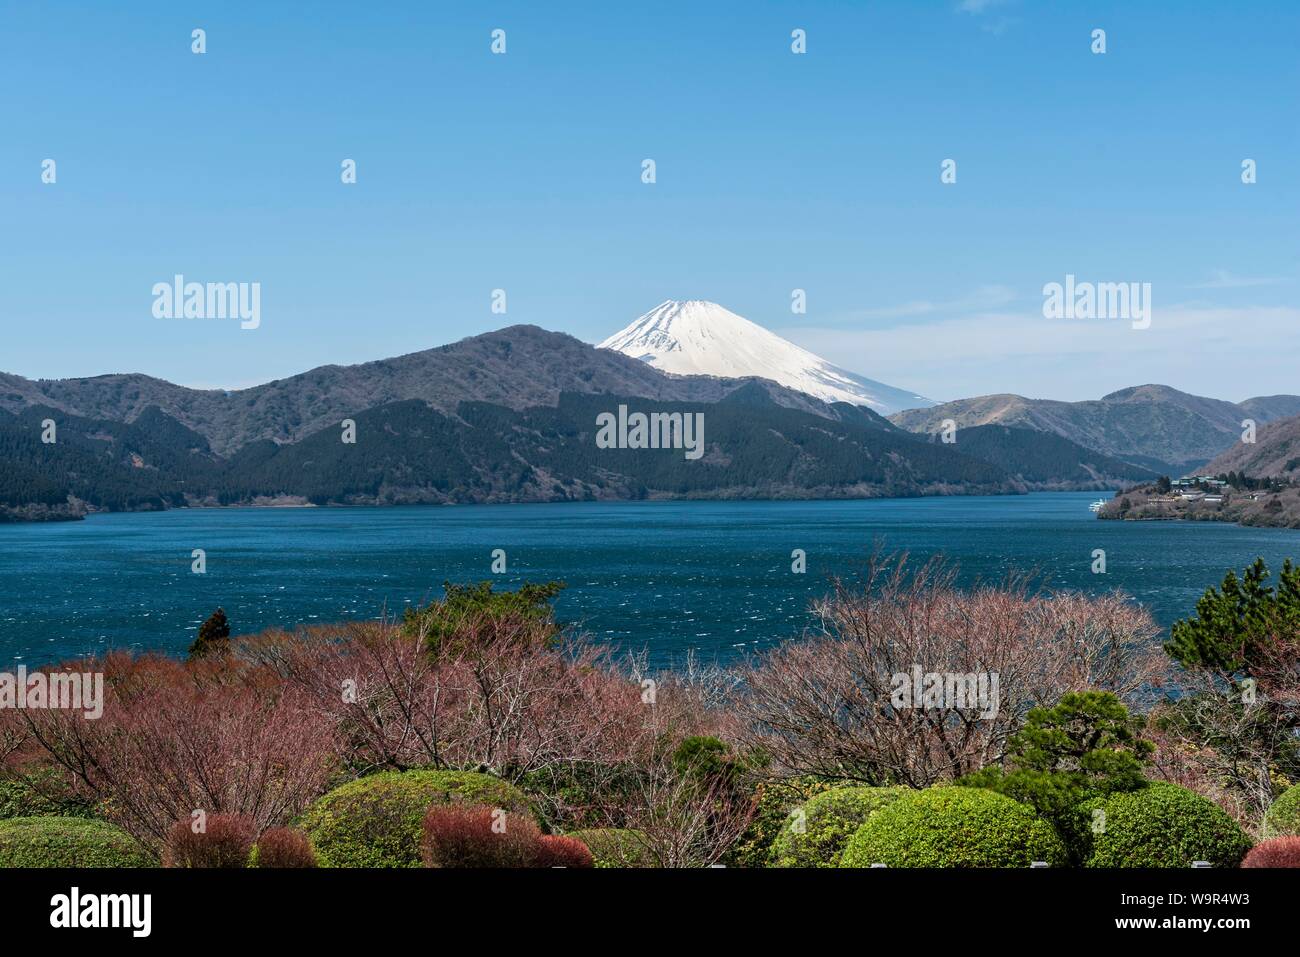 Ashi Lake, Mount Fuji at the back, Hakone, Fuji-Hakone-Izu National Park, Japan Stock Photo